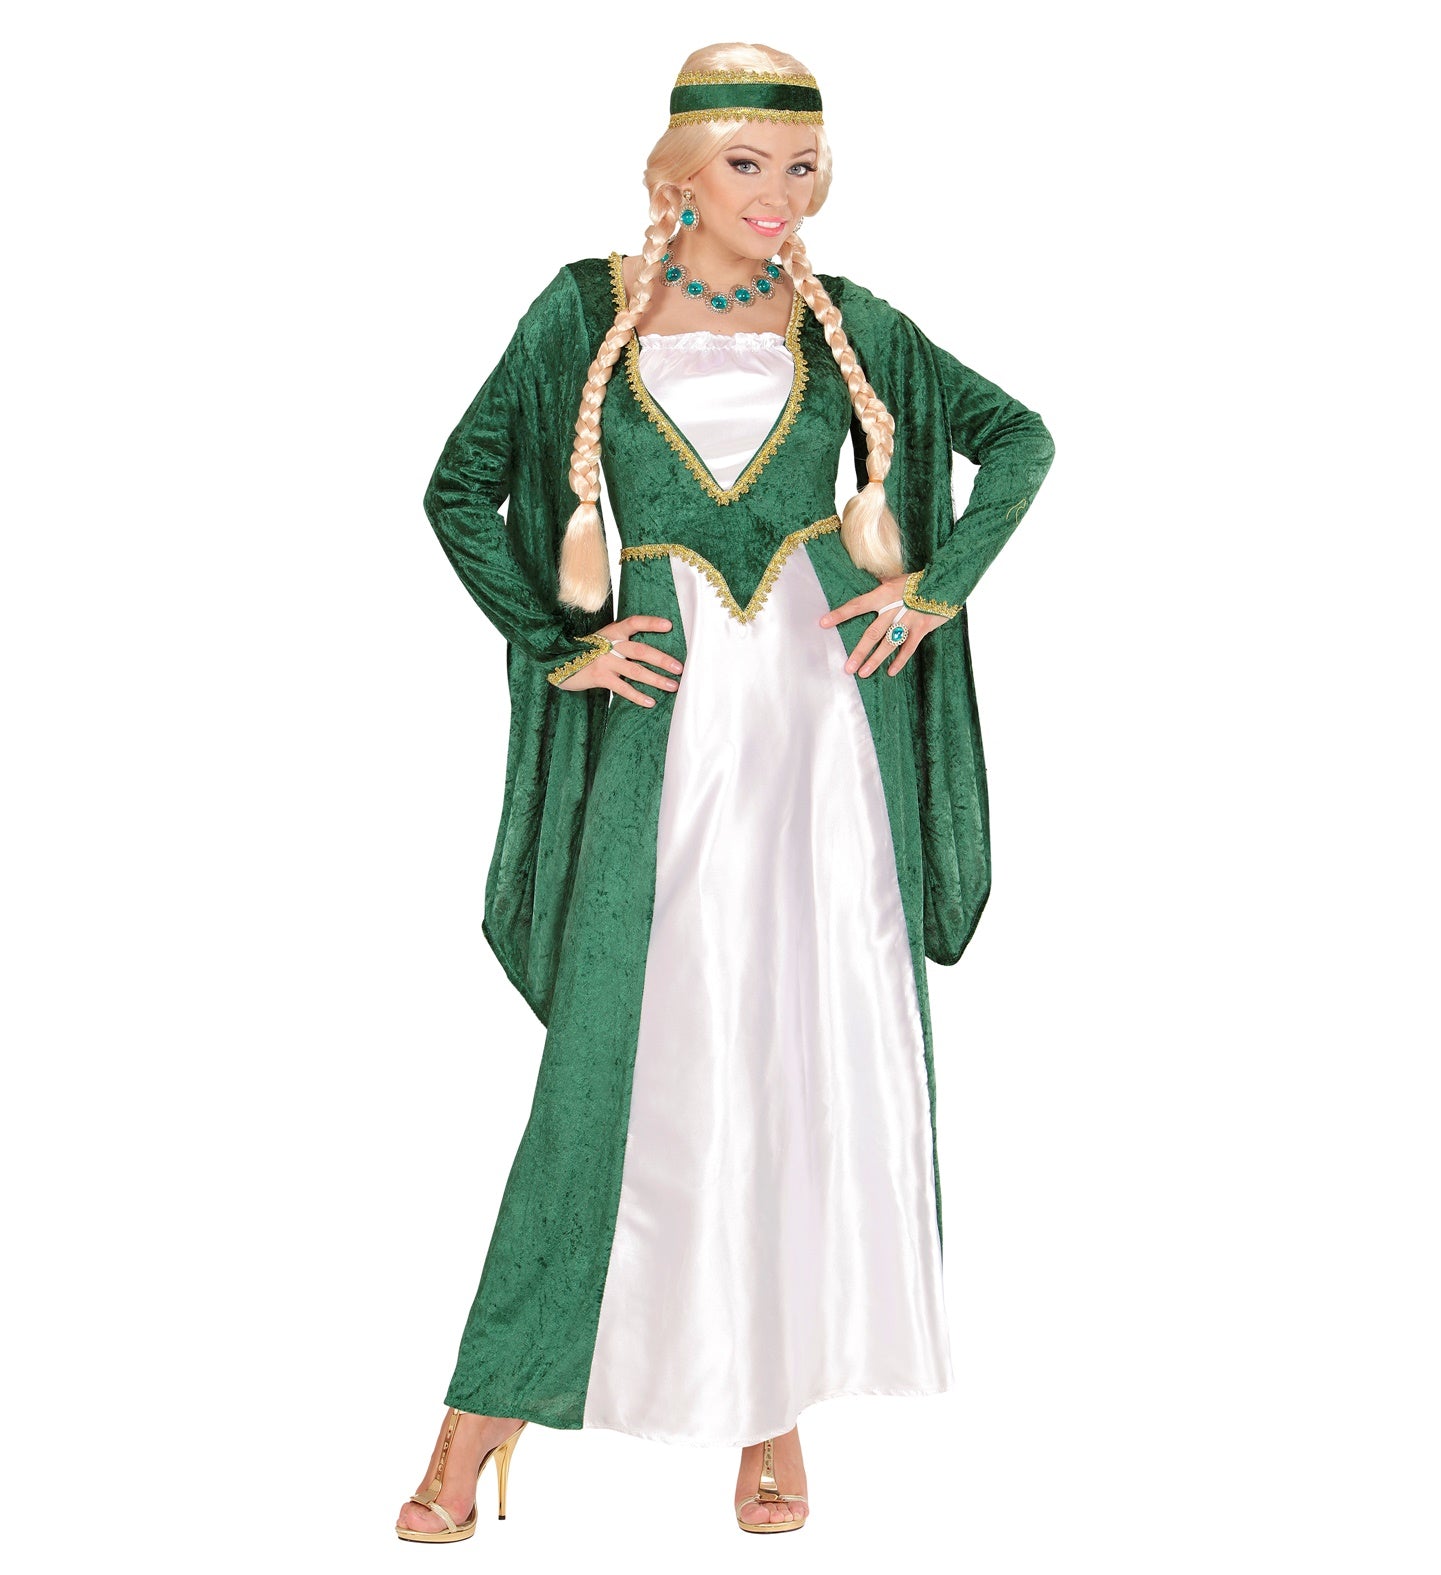 Deluxe Renaissance Queen medieval dress green